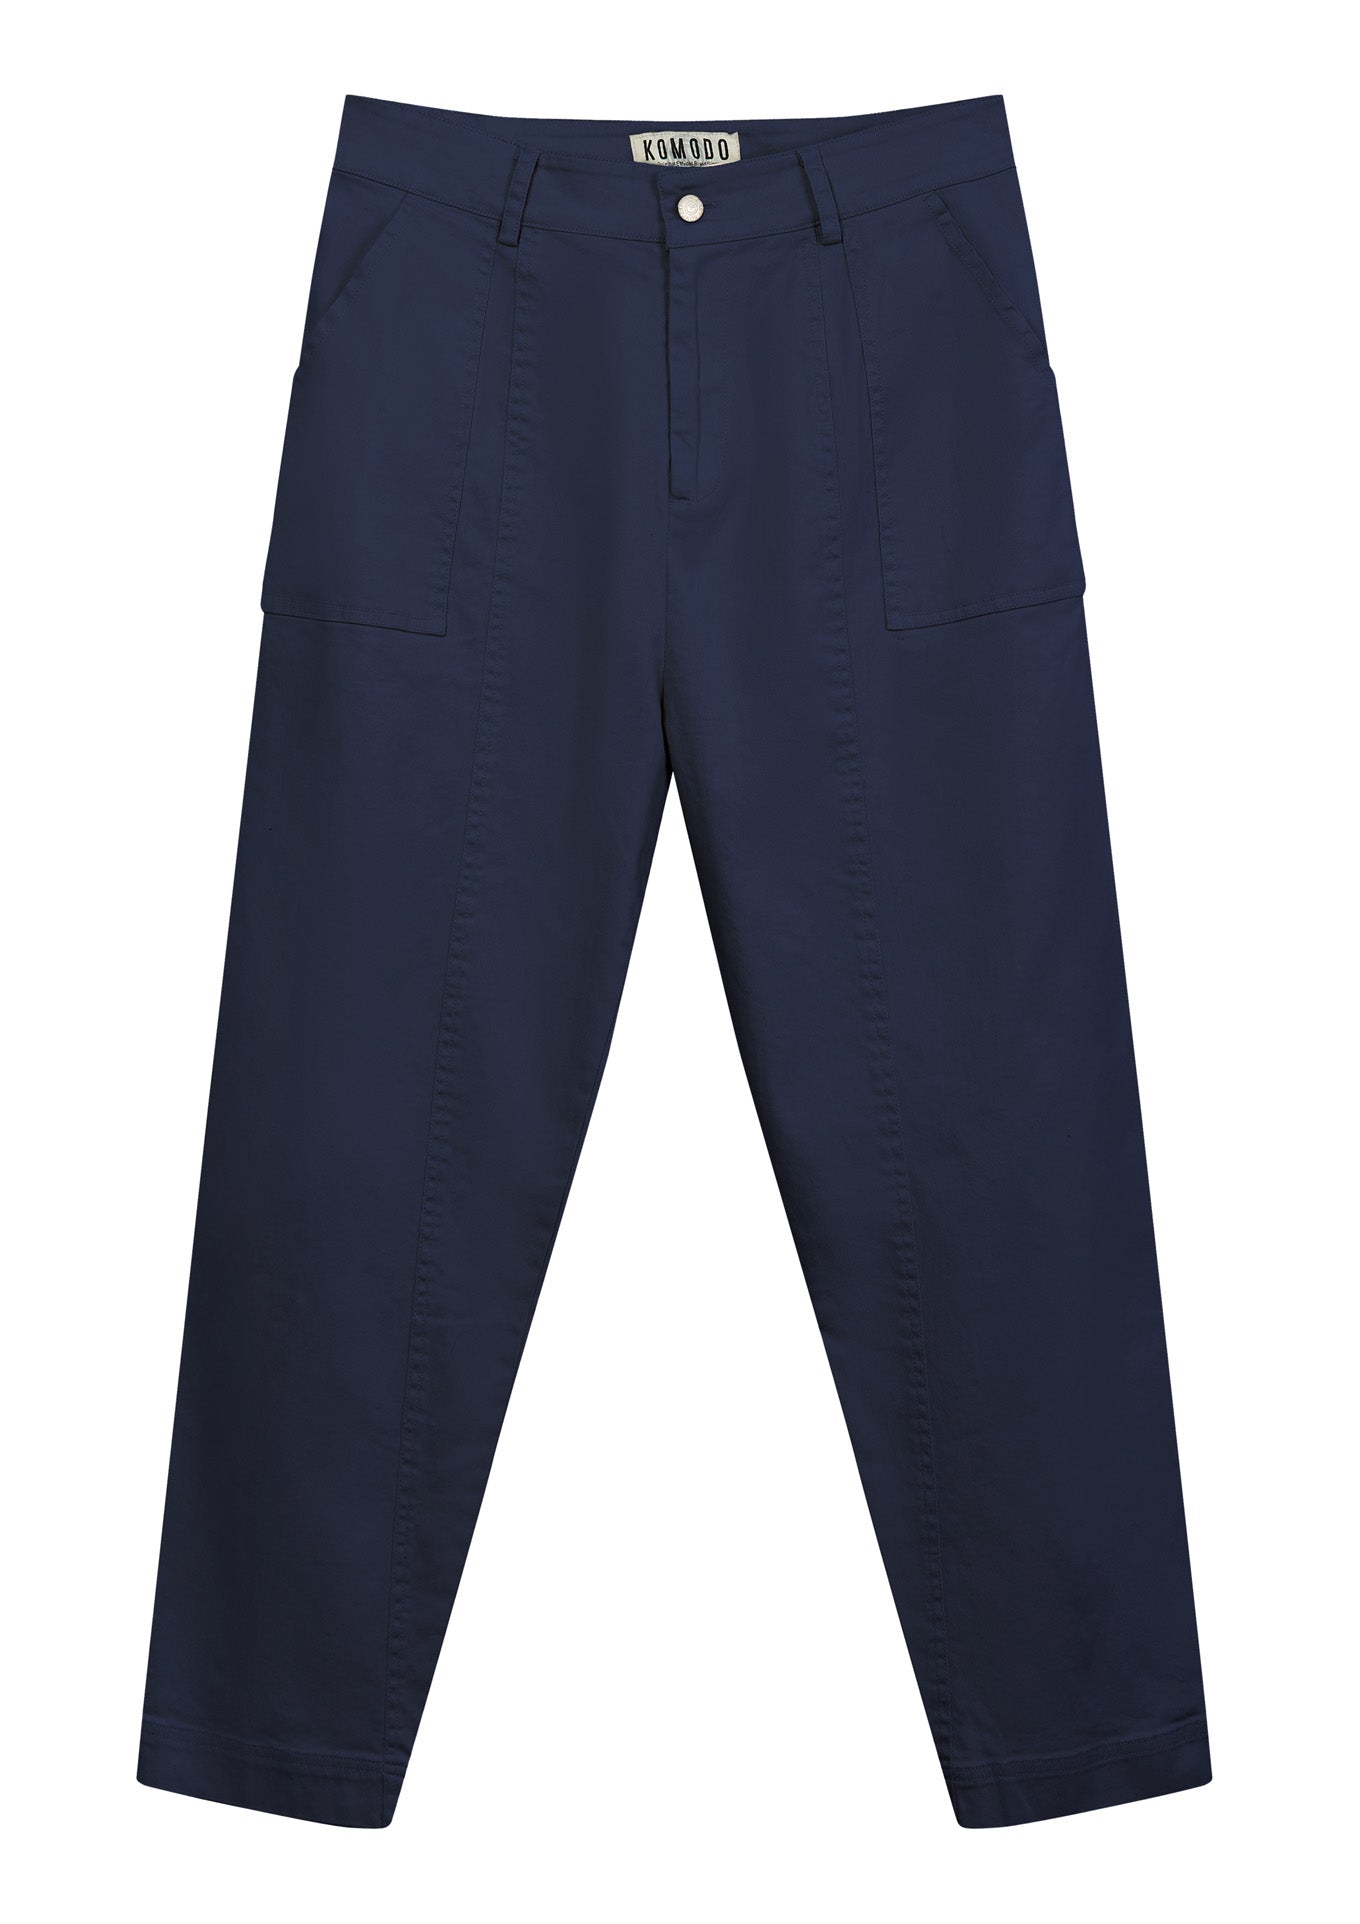 NIZANA Organic Cotton Men's Trouser - Dark Navy